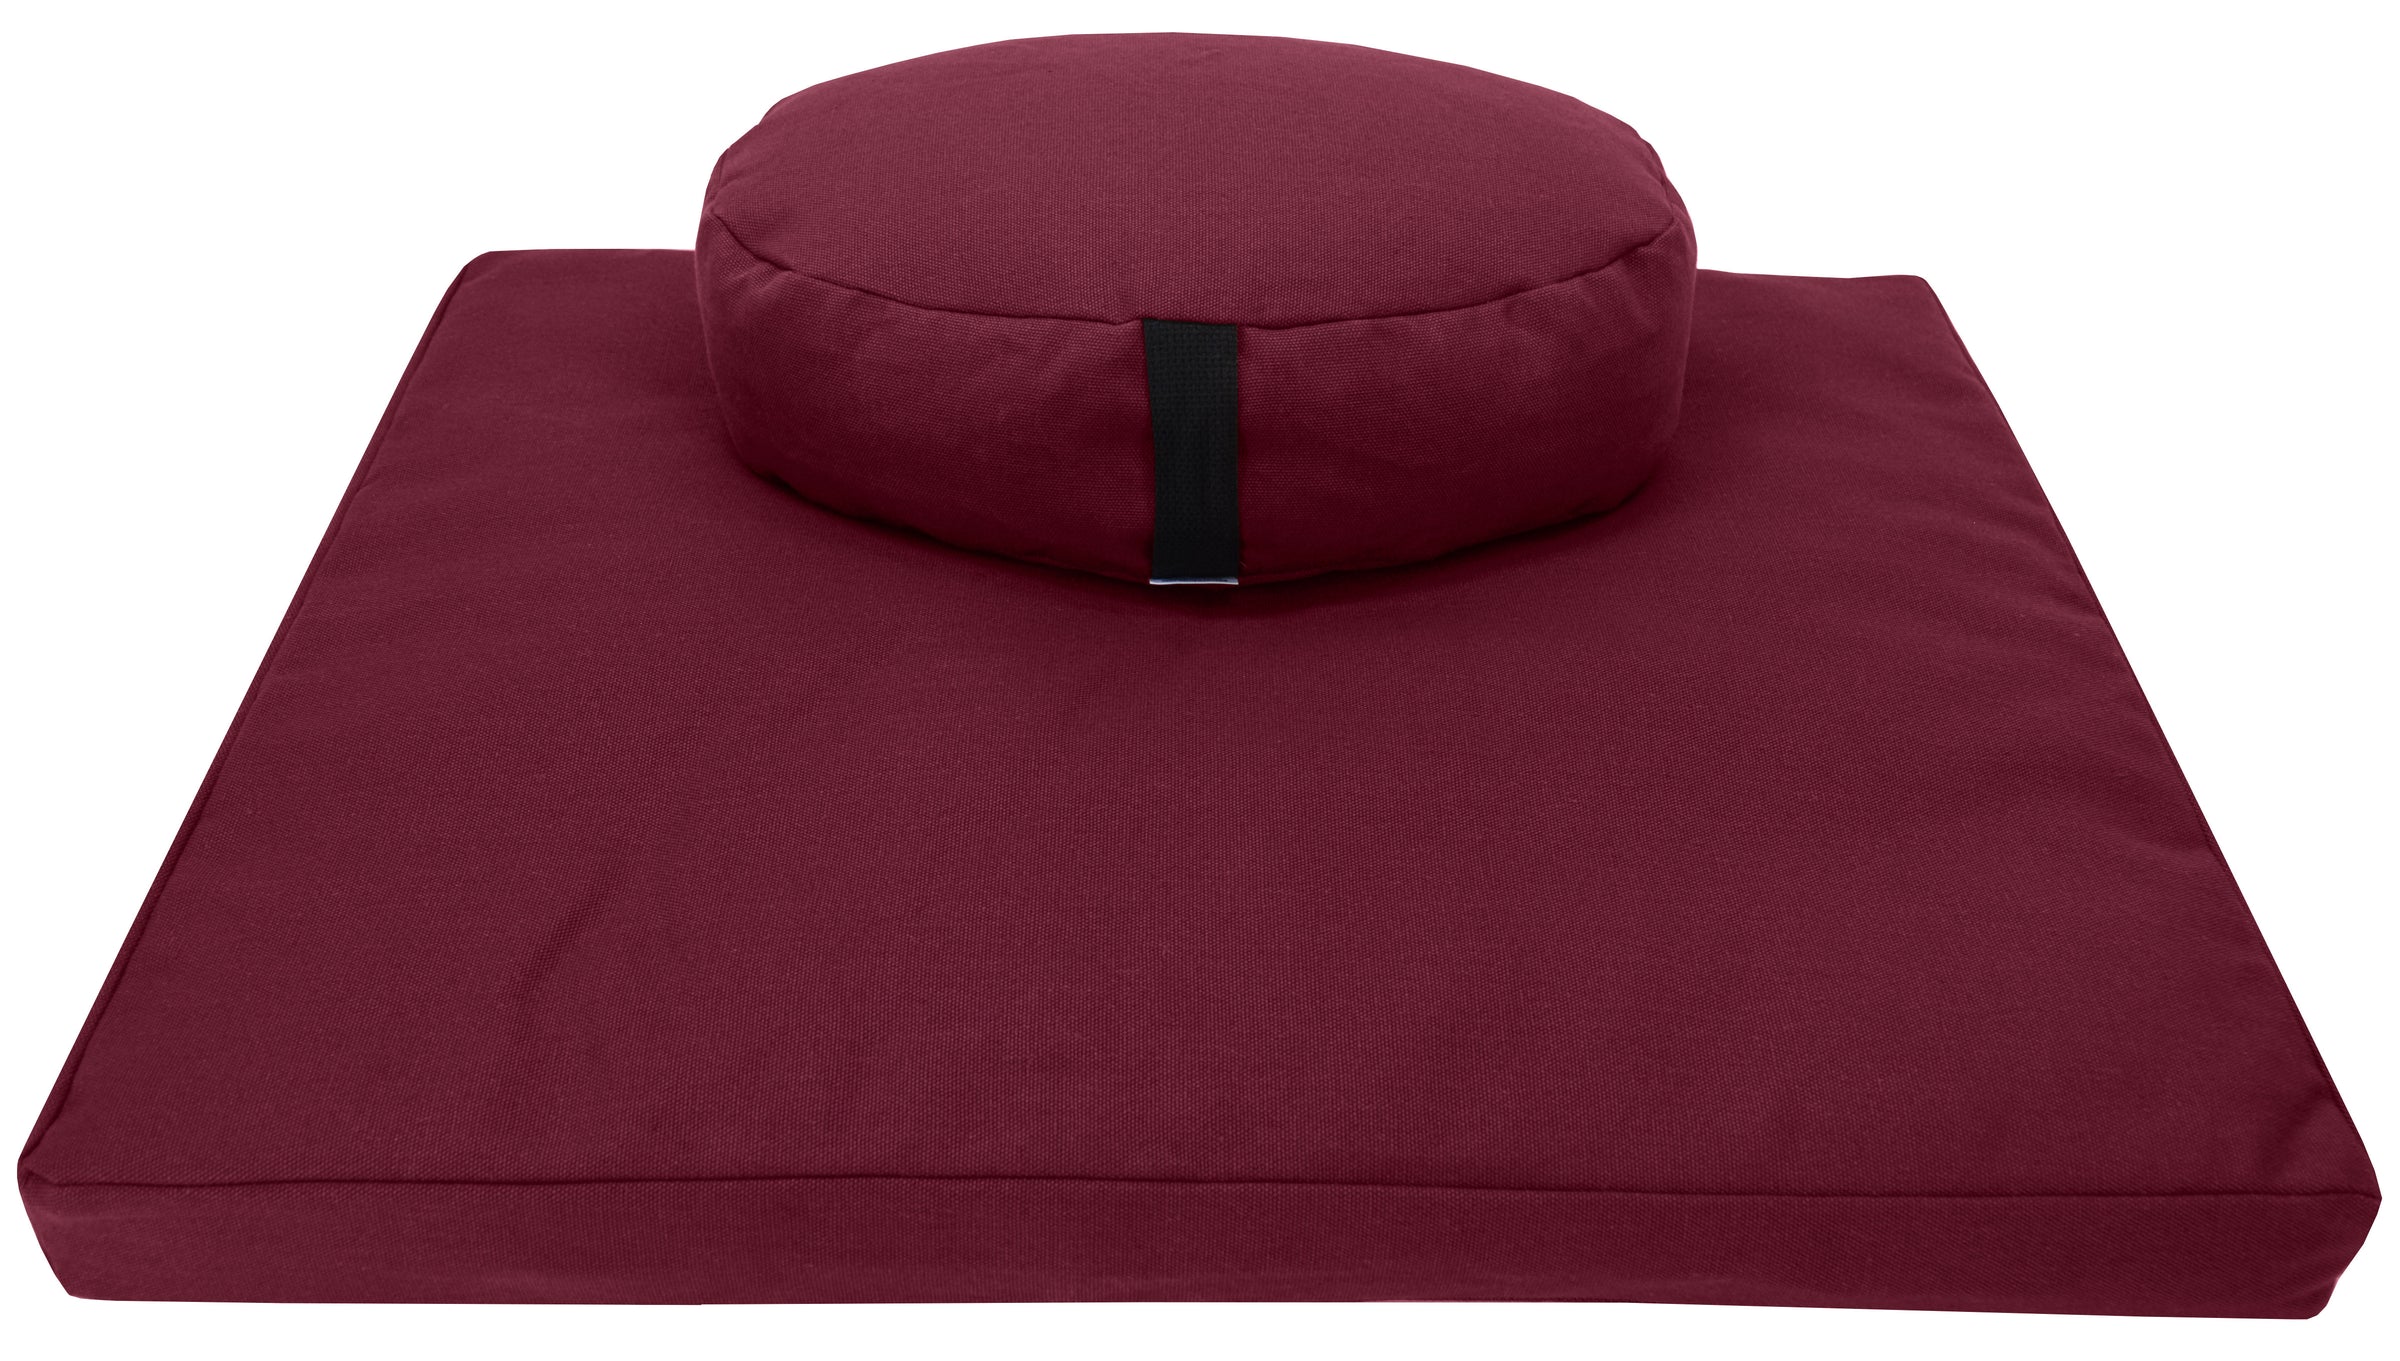 ZenBless Zafu and Zabuton Meditation Cushion Set,Yoga Meditation Floor  Pillow,Large Square Meditation Mat and Pillow Set for Sitting on  Floor(23.6) : : Sports & Outdoors